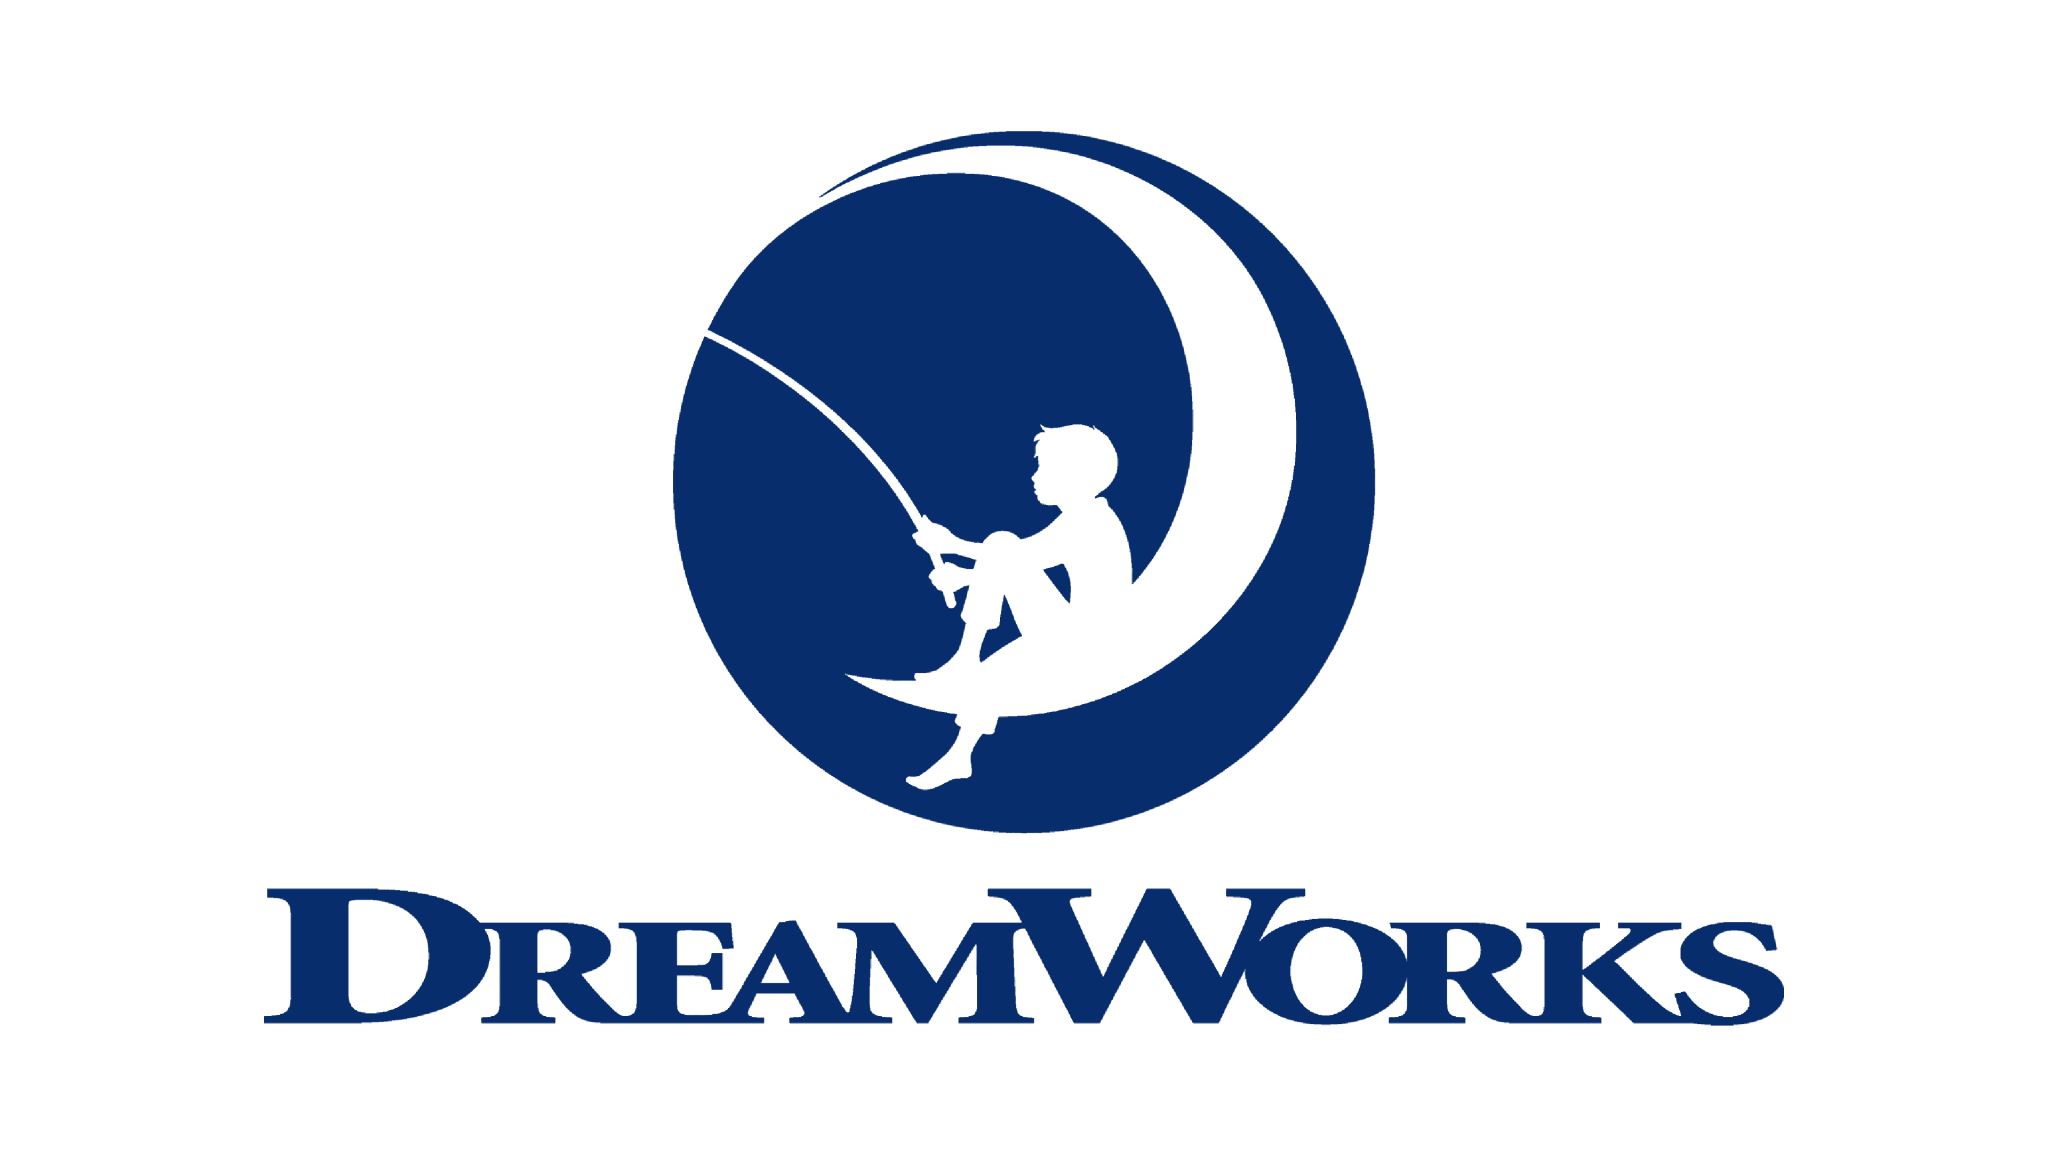 Dreamworks Dreamworks Animation Logotipo Imagen Png Imagen Images And ...